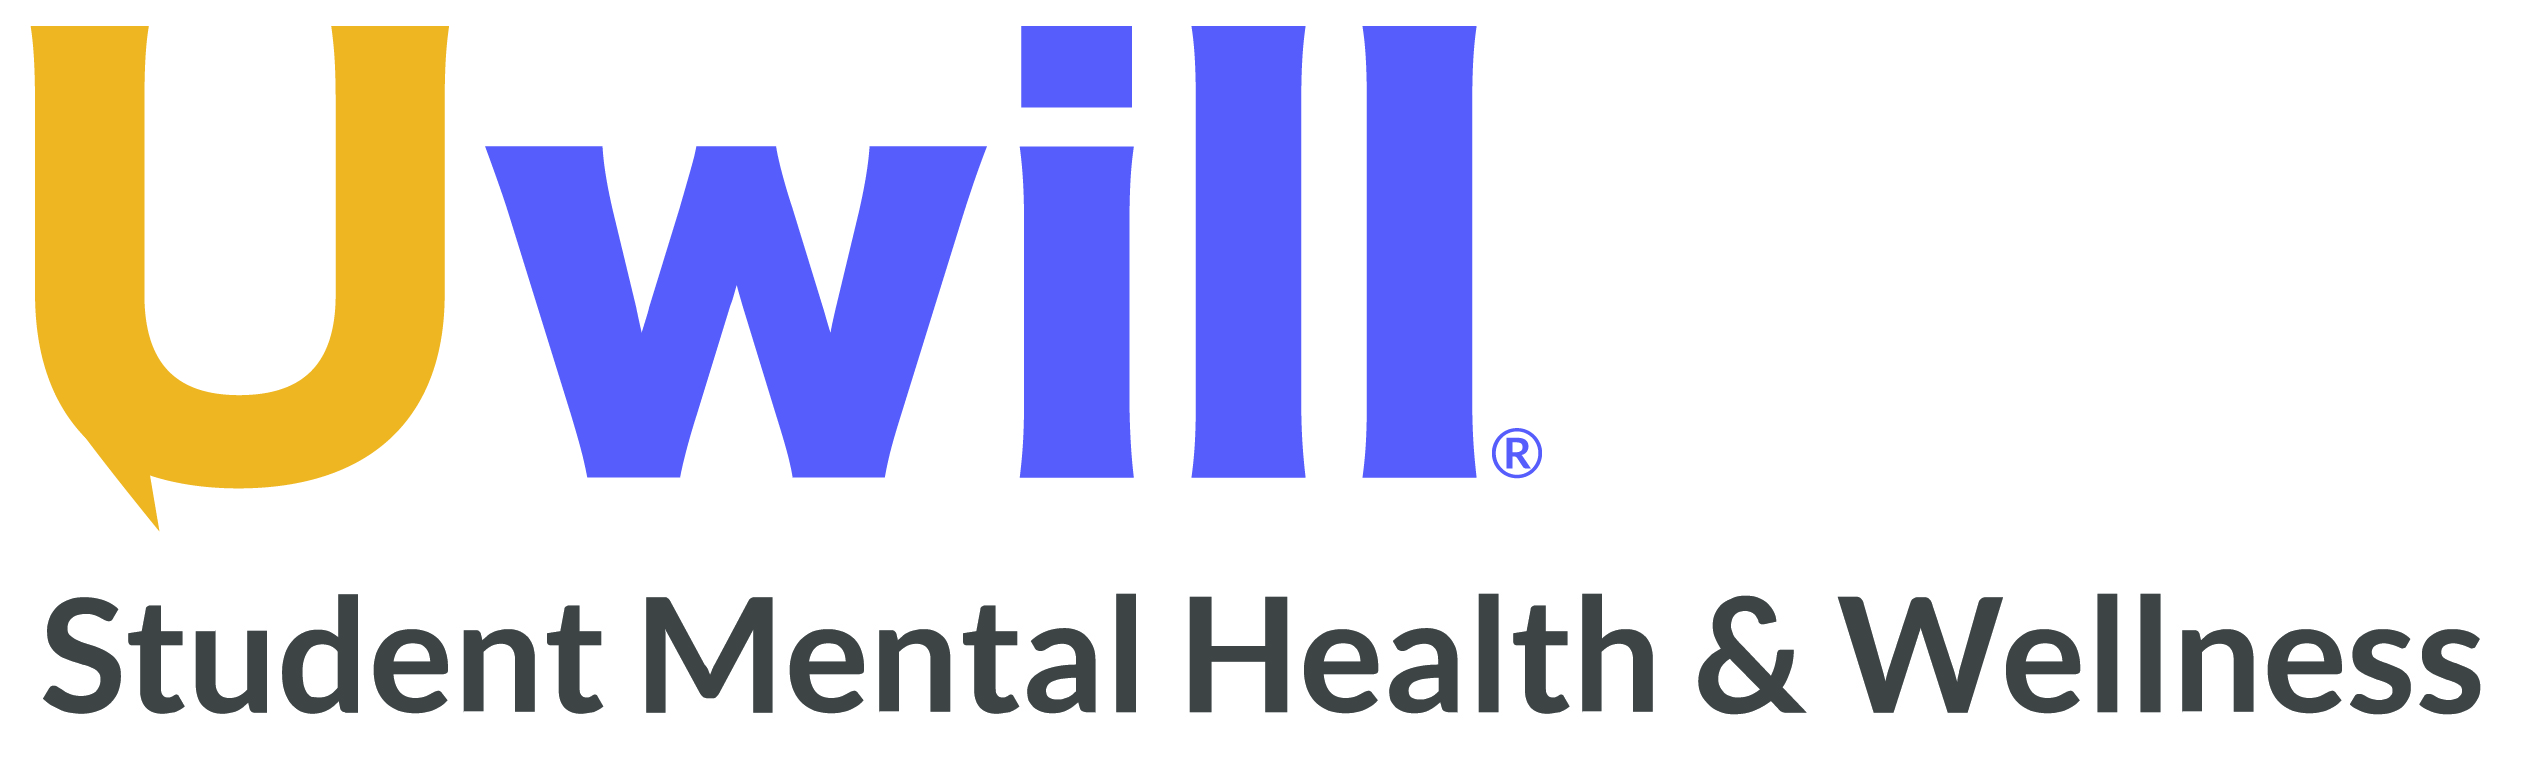 Wwill: Student Mental Health & Wellness